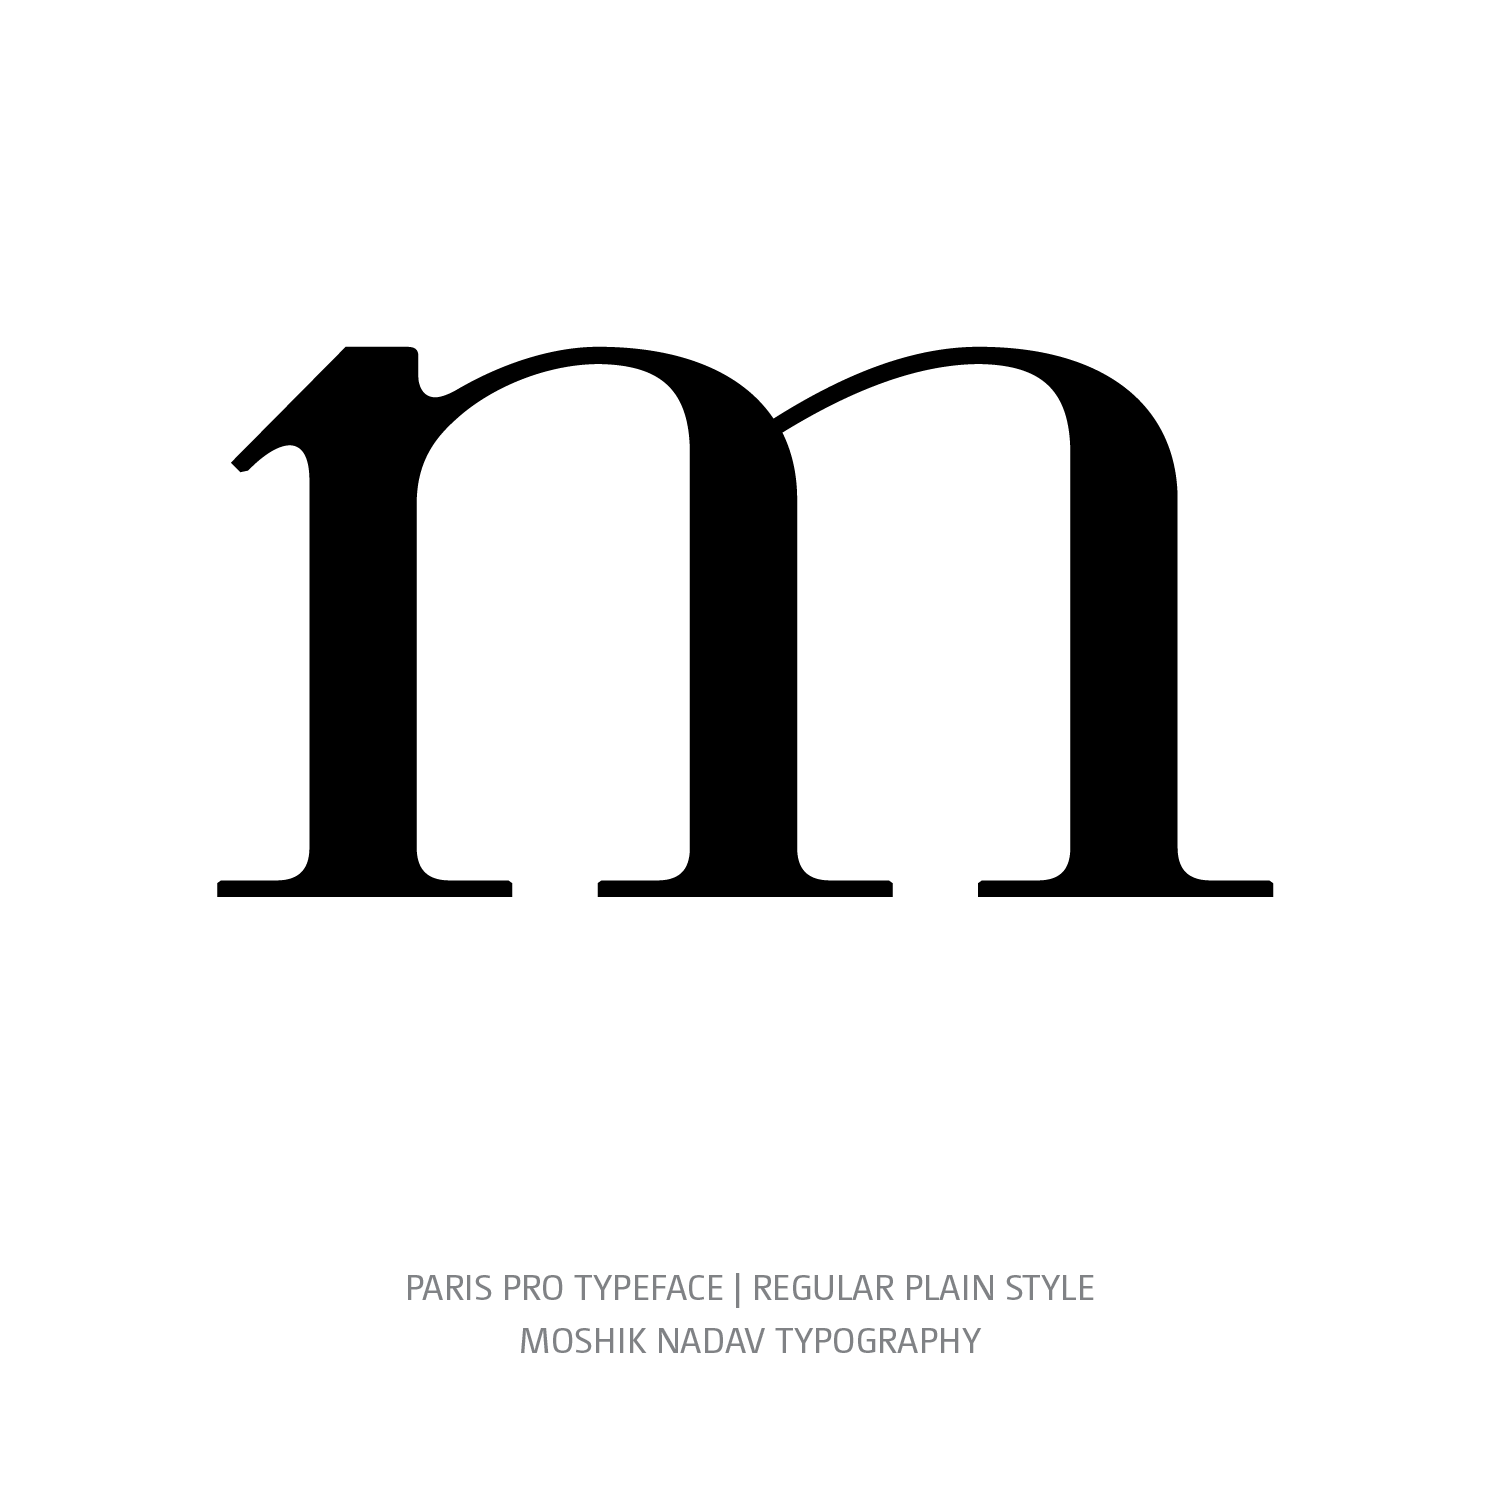 Paris Pro Typeface Regular Plain m